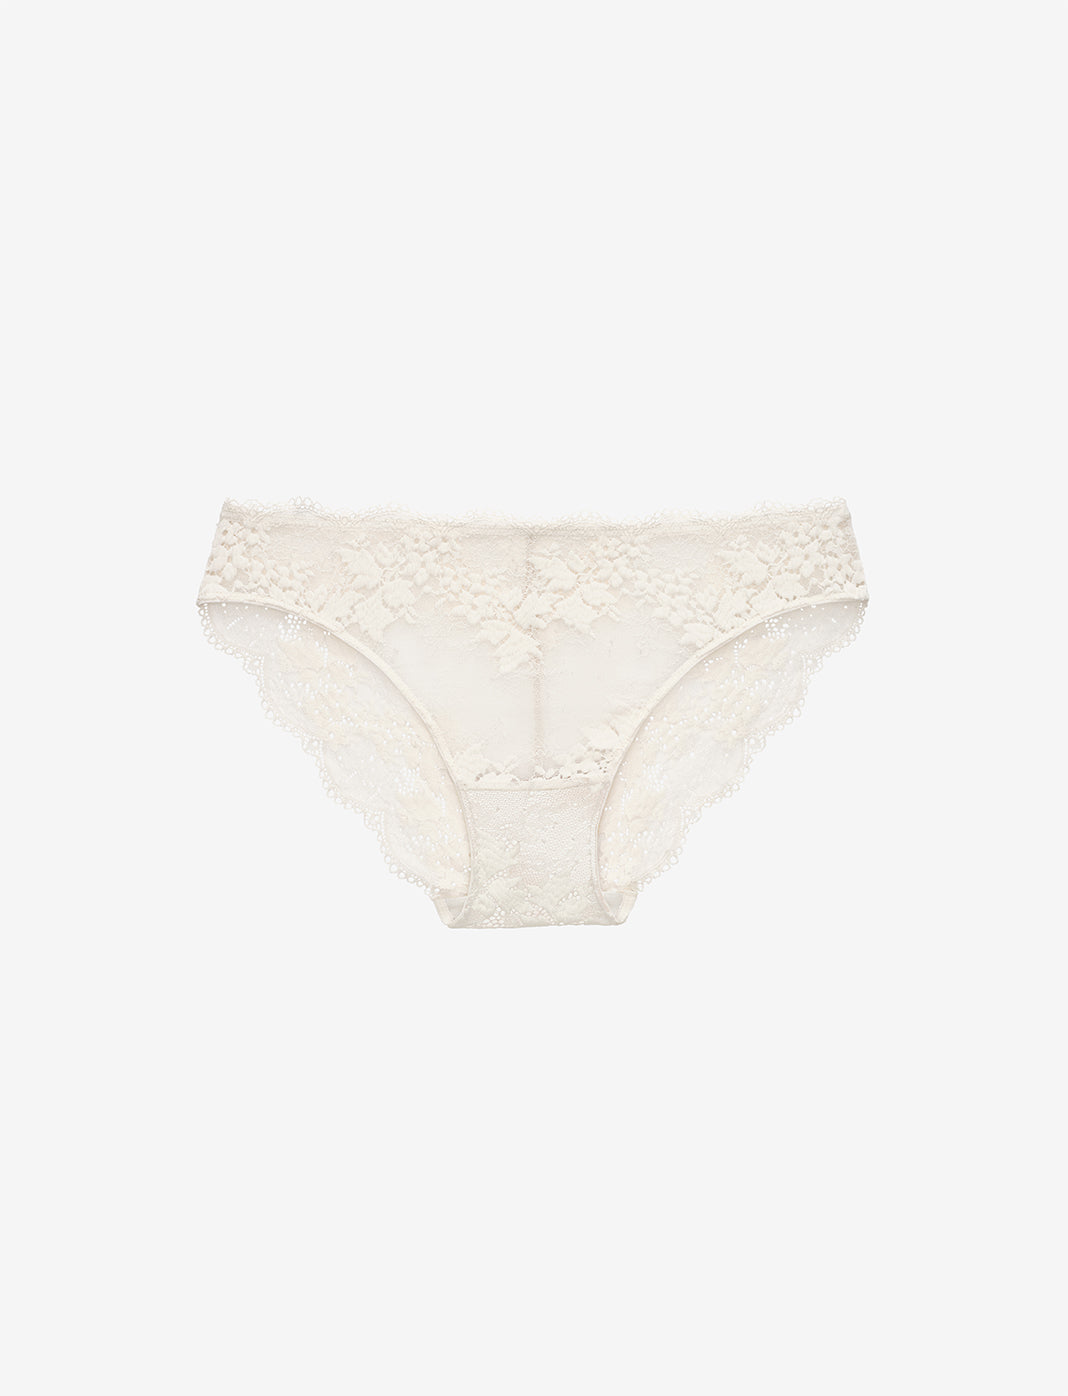 Women's Lace Underwear - Comfortable Lace Panties for Women